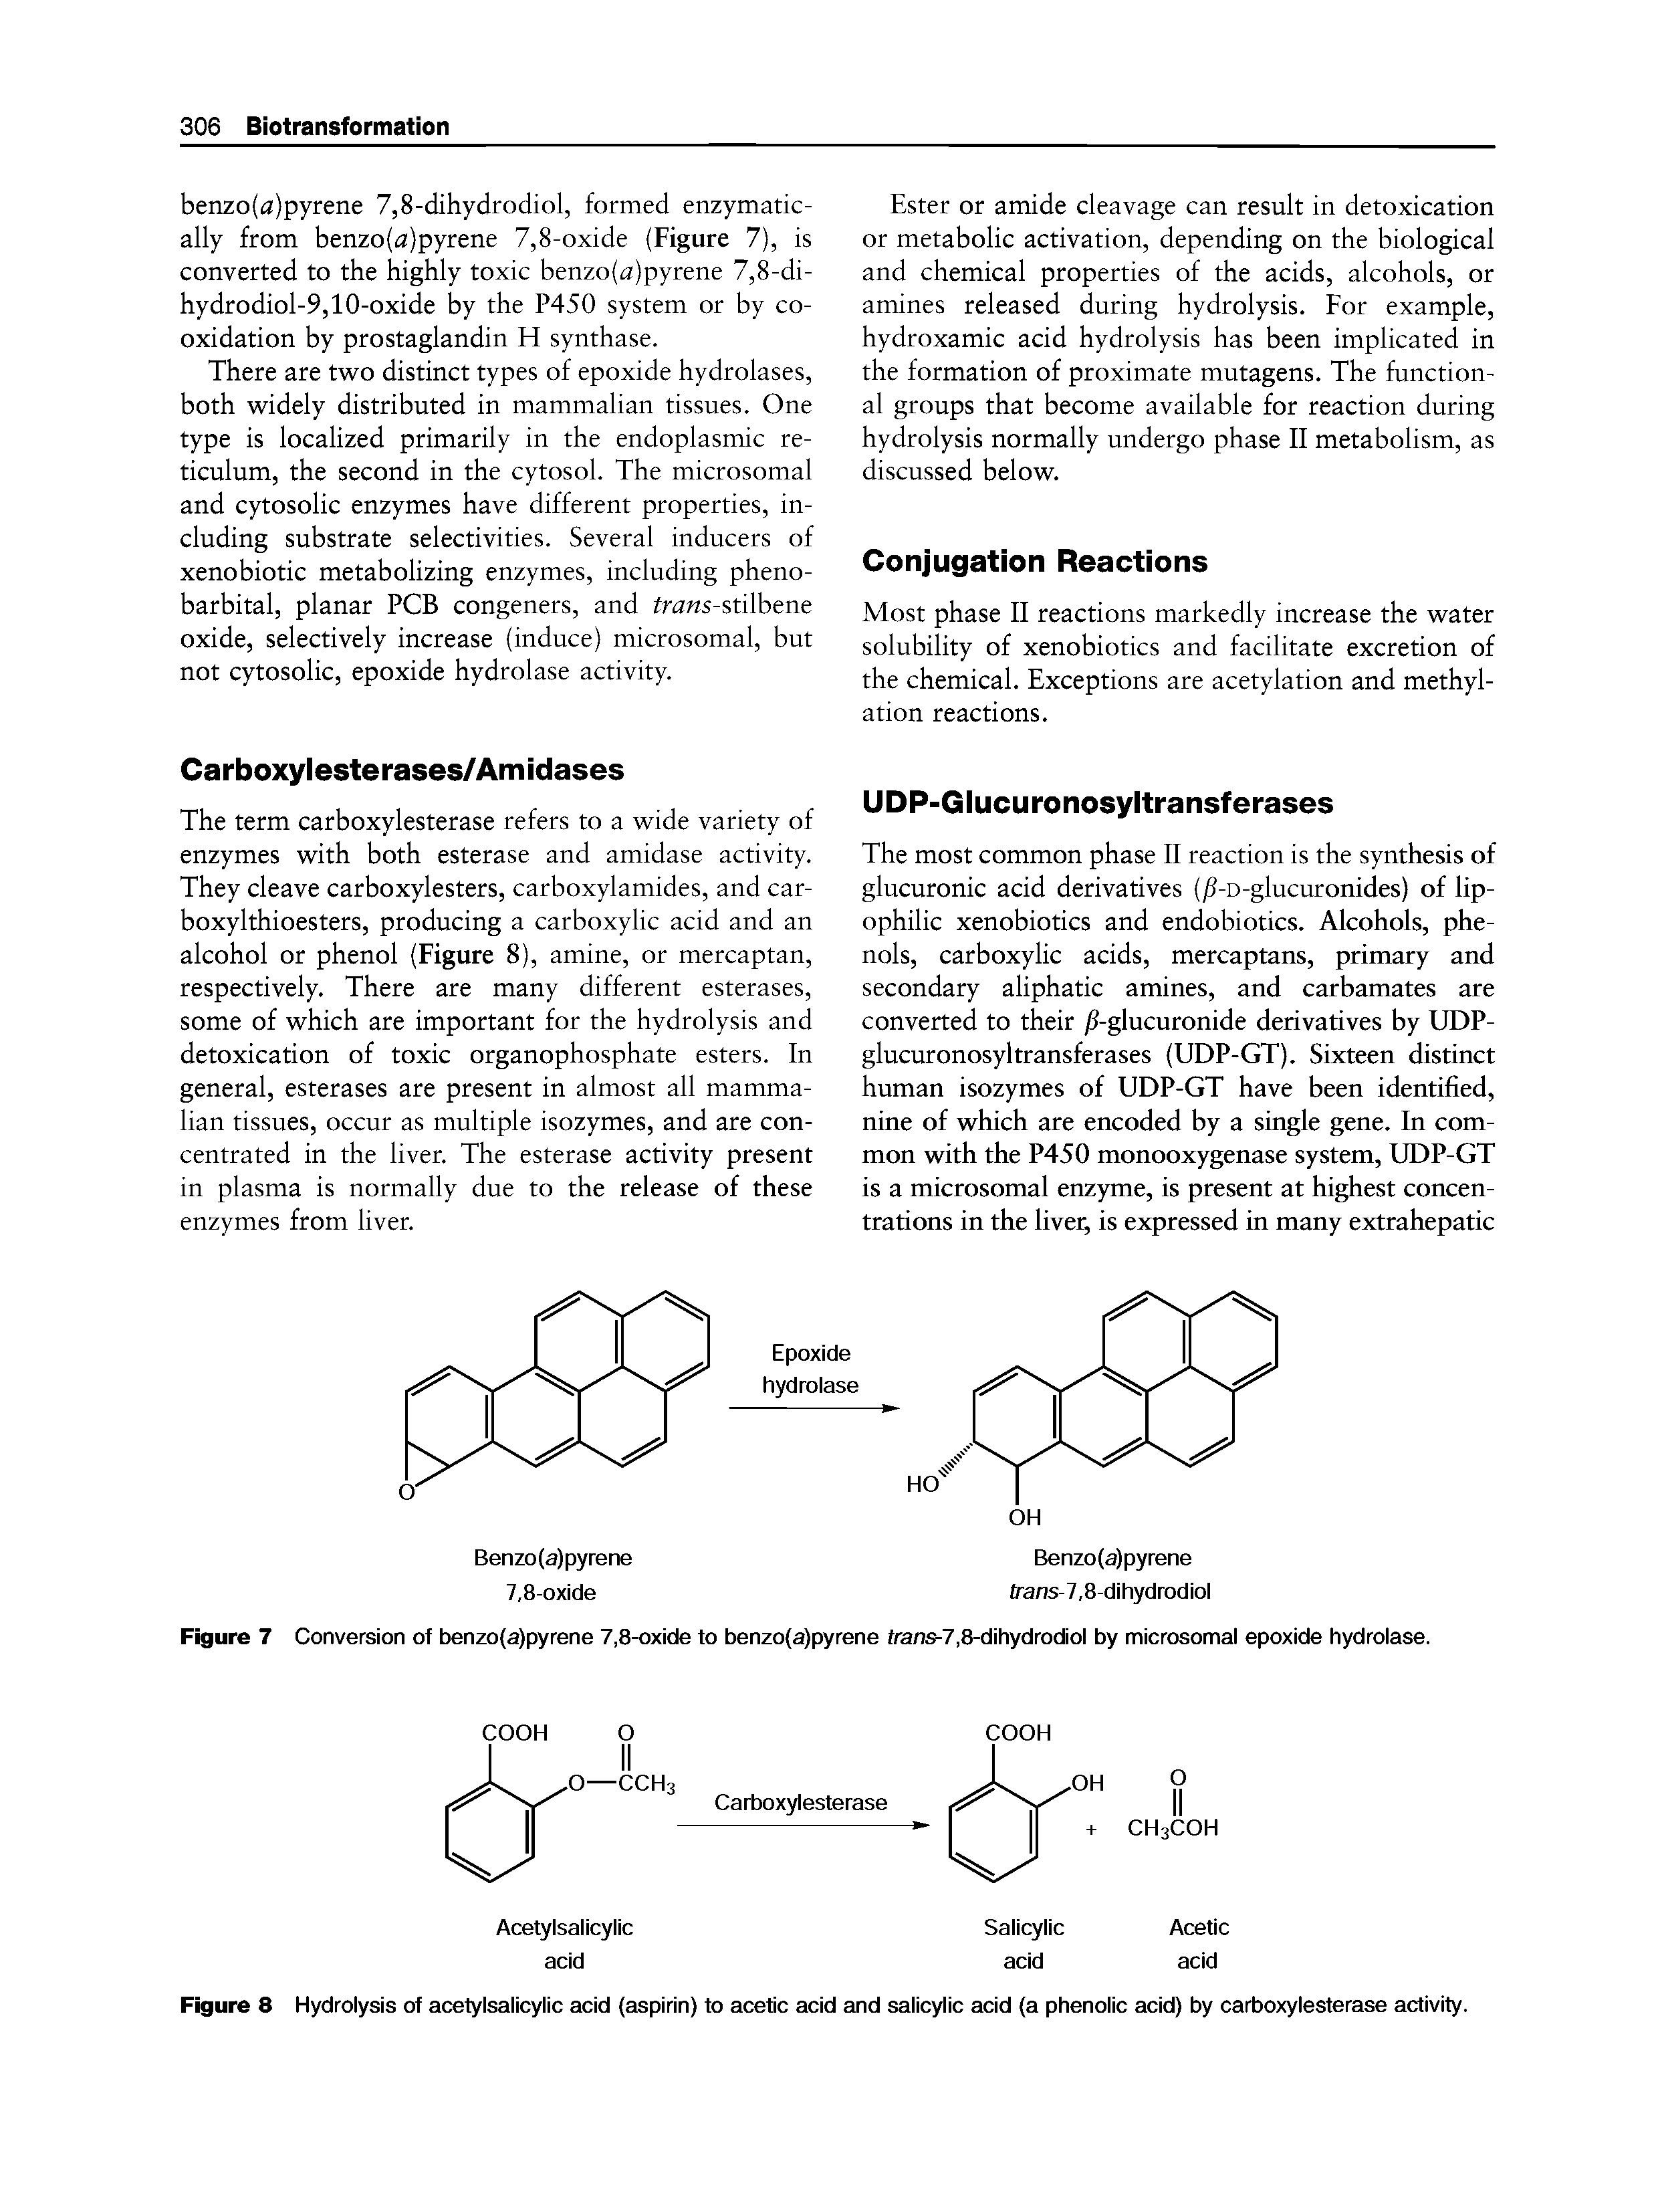 Figure 7 Conversion of benzo(a)pyrene 7,8-oxide to benzo(a)pyrene trans-7,8-dihydrodiol by microsomal epoxide hydrolase.